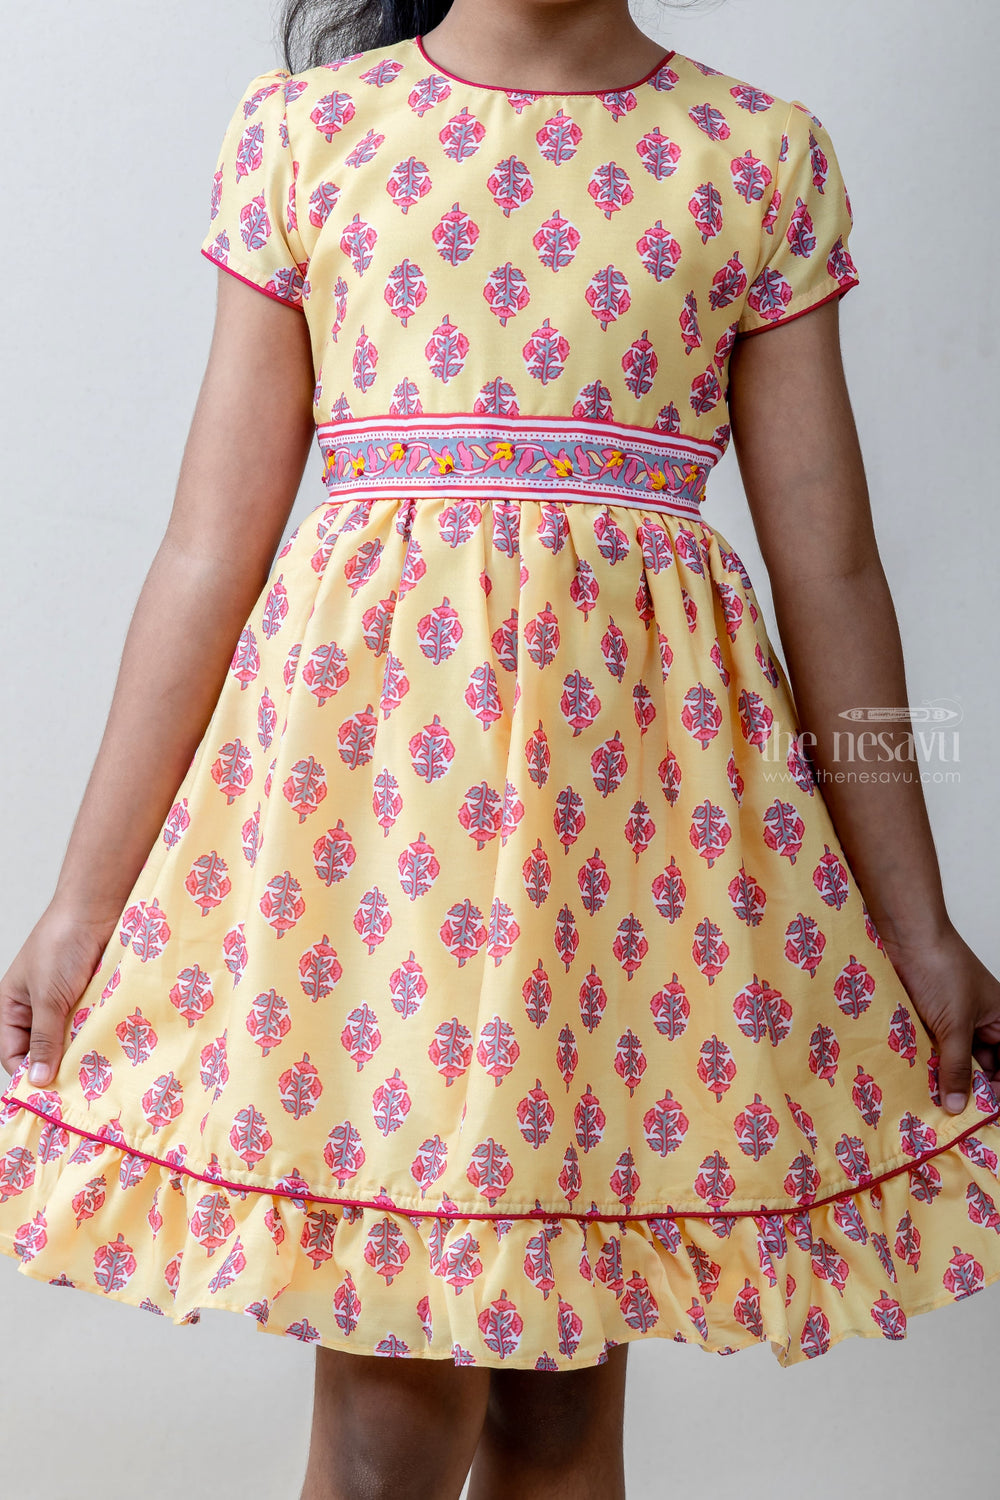 The Nesavu Frocks & Dresses Yellow With Floral Printed designs Casual Cotton Wear psr silks Nesavu